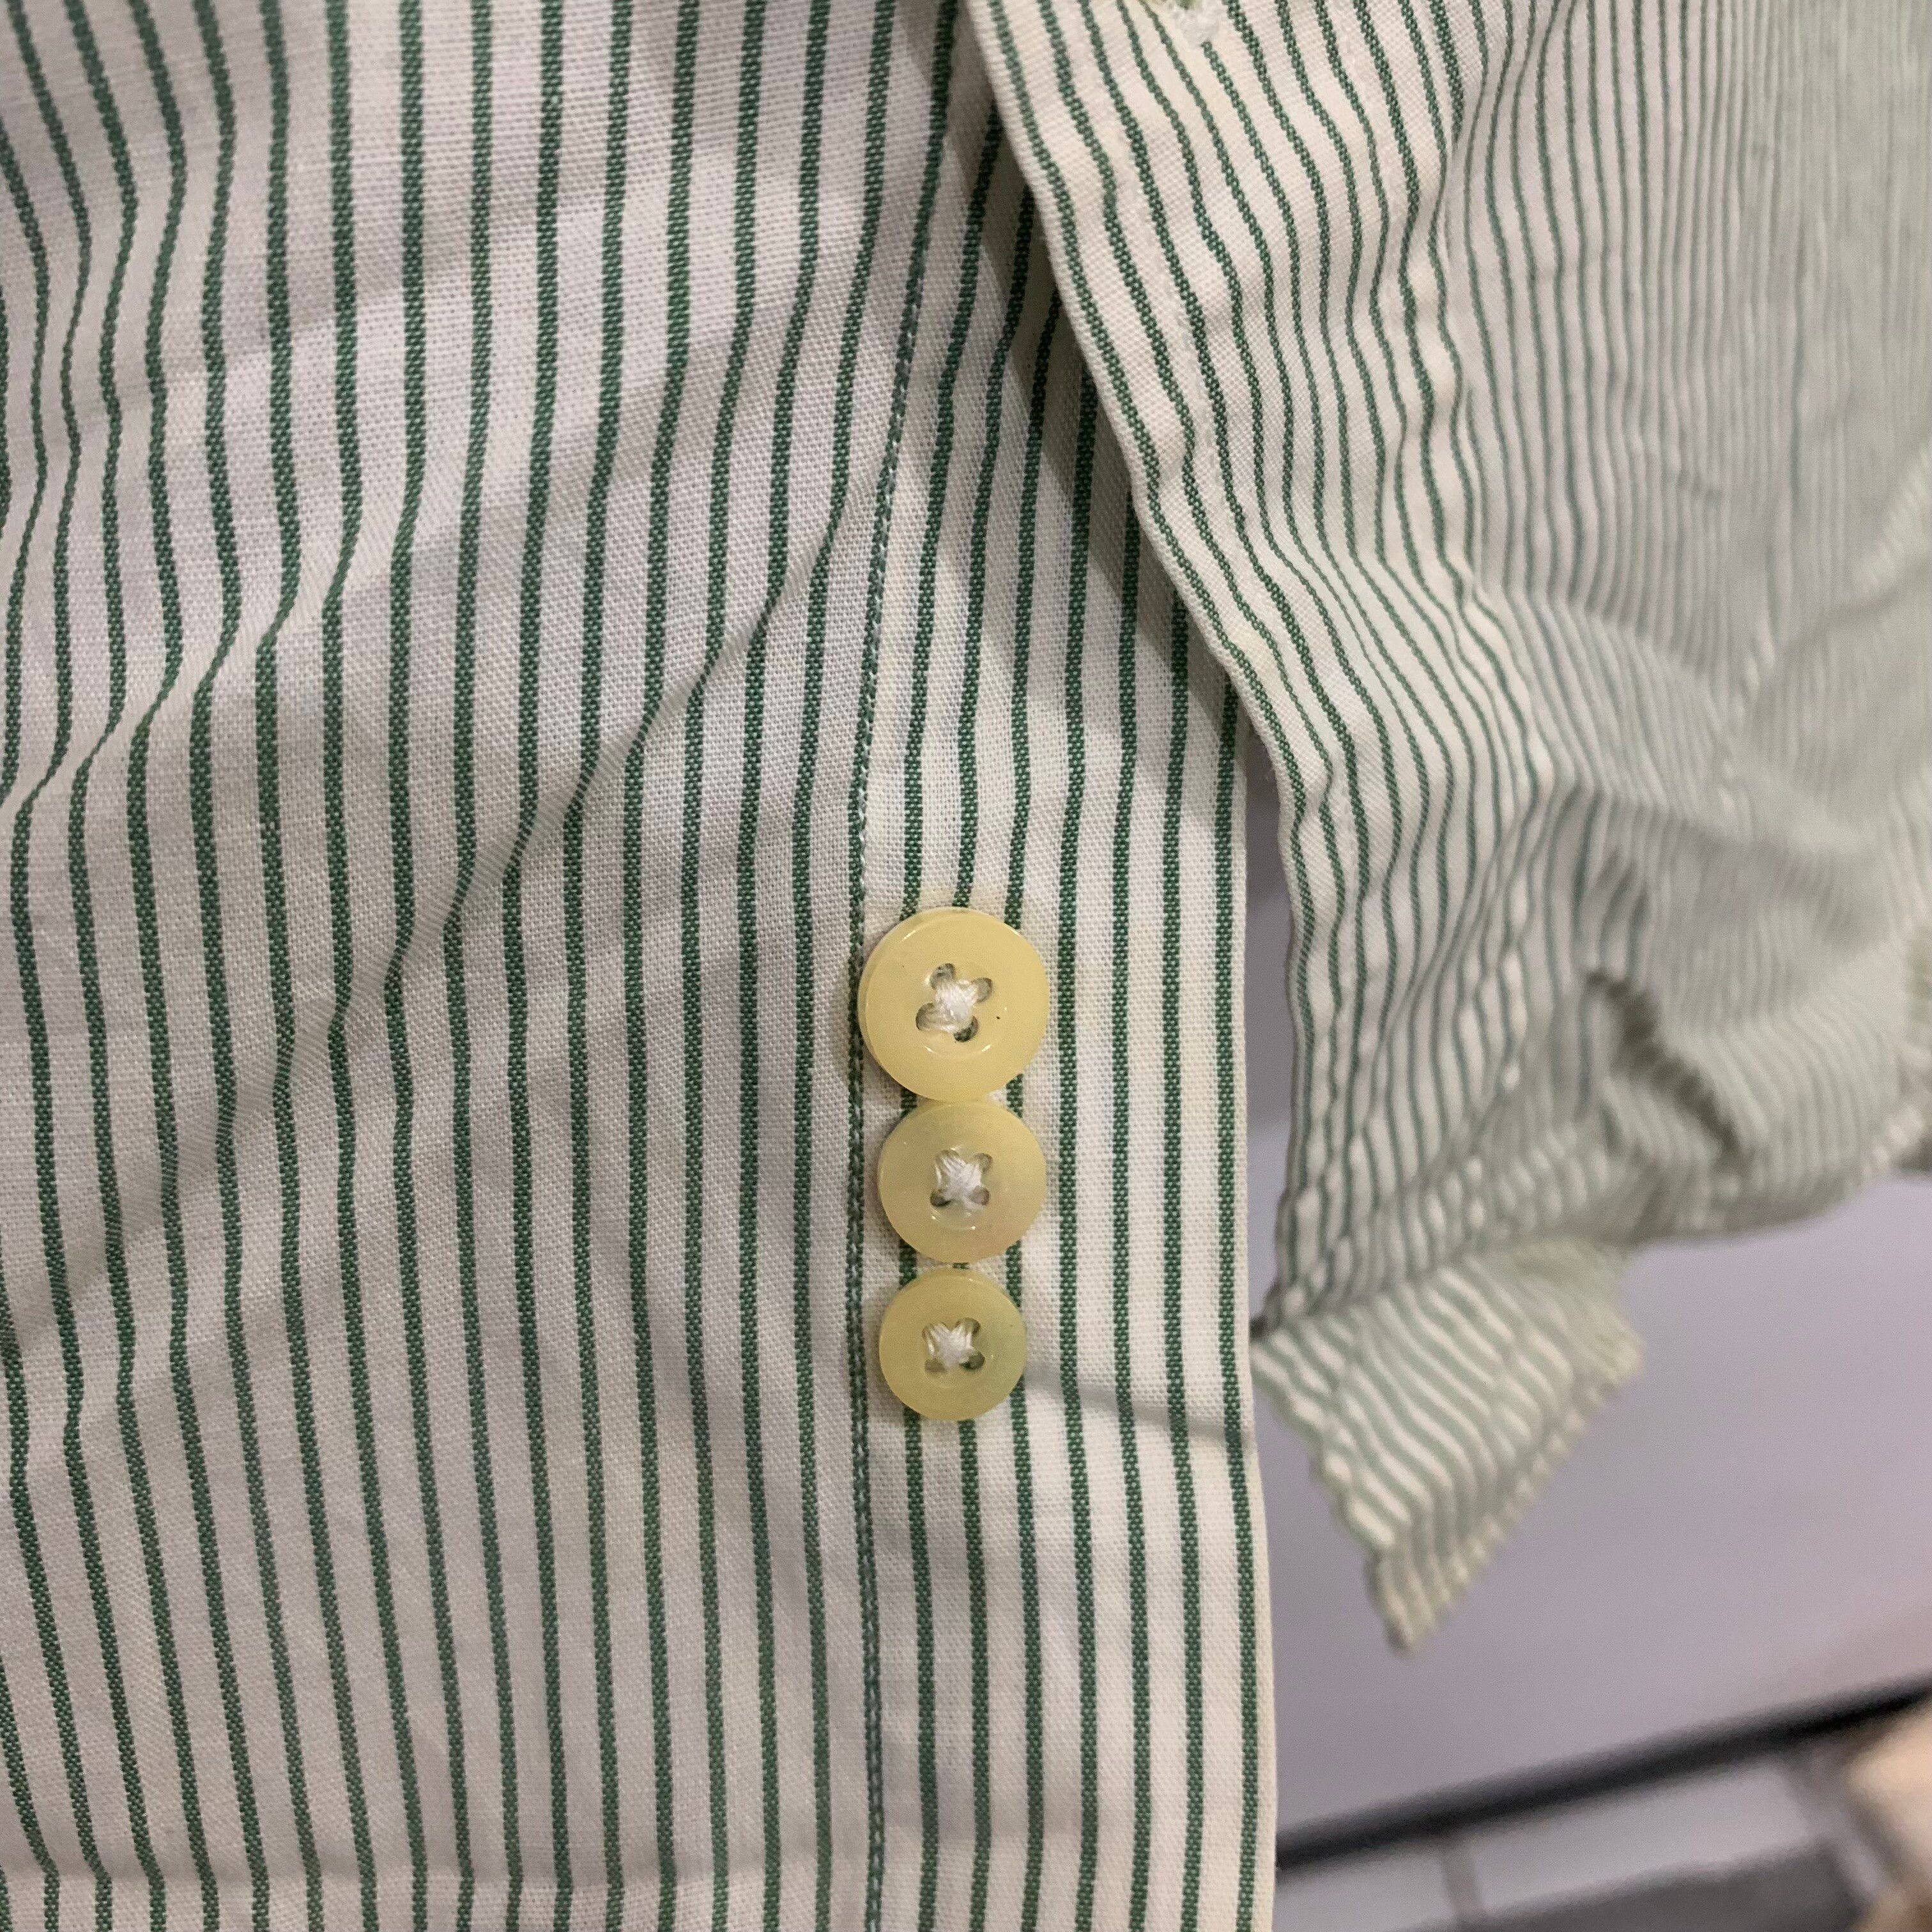 Burberry Vintage Burberry Striped Longsleeve Shirt Button Up Size US L / EU 52-54 / 3 - 7 Thumbnail